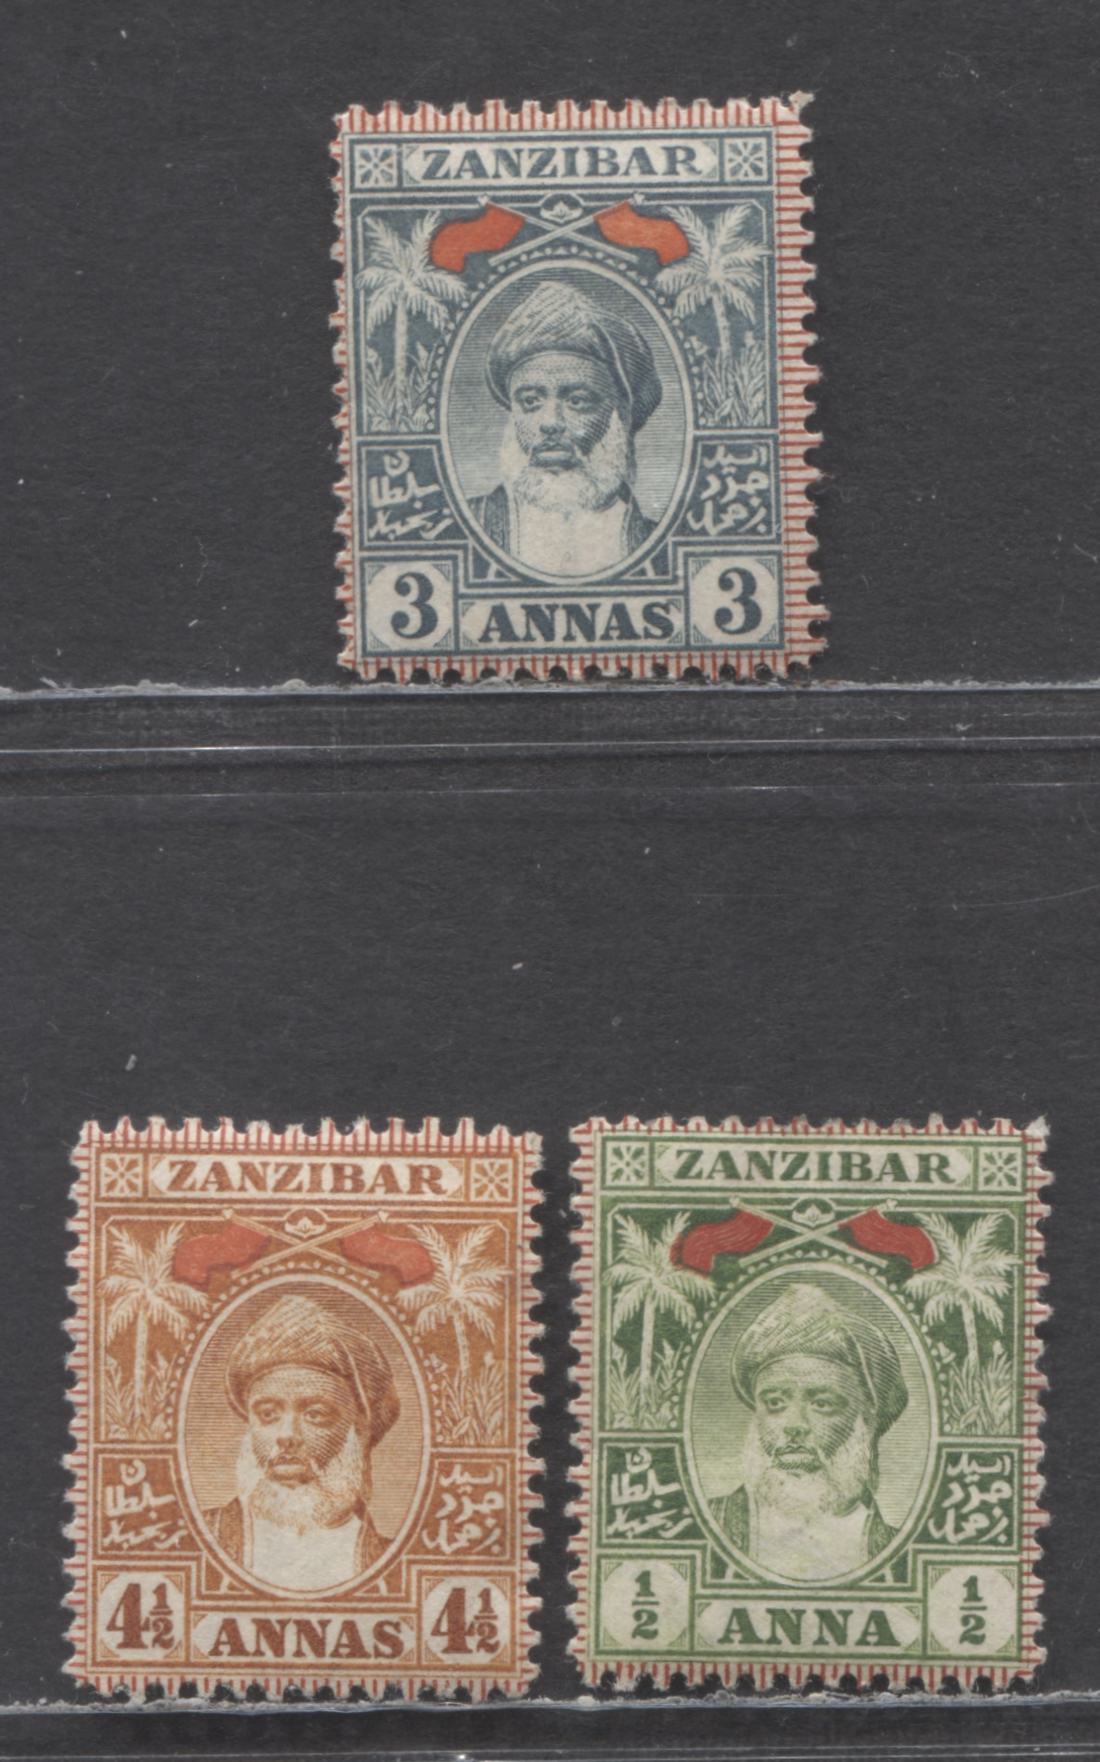 Lot 99 Zanzibar SC#62/69 1899-1901 Sulten Seyyid Hamoud bin Mahommed bin Said Issue, 3 VFOG & Unused Singles, Click on Listing to See ALL Pictures, Estimated Value $17